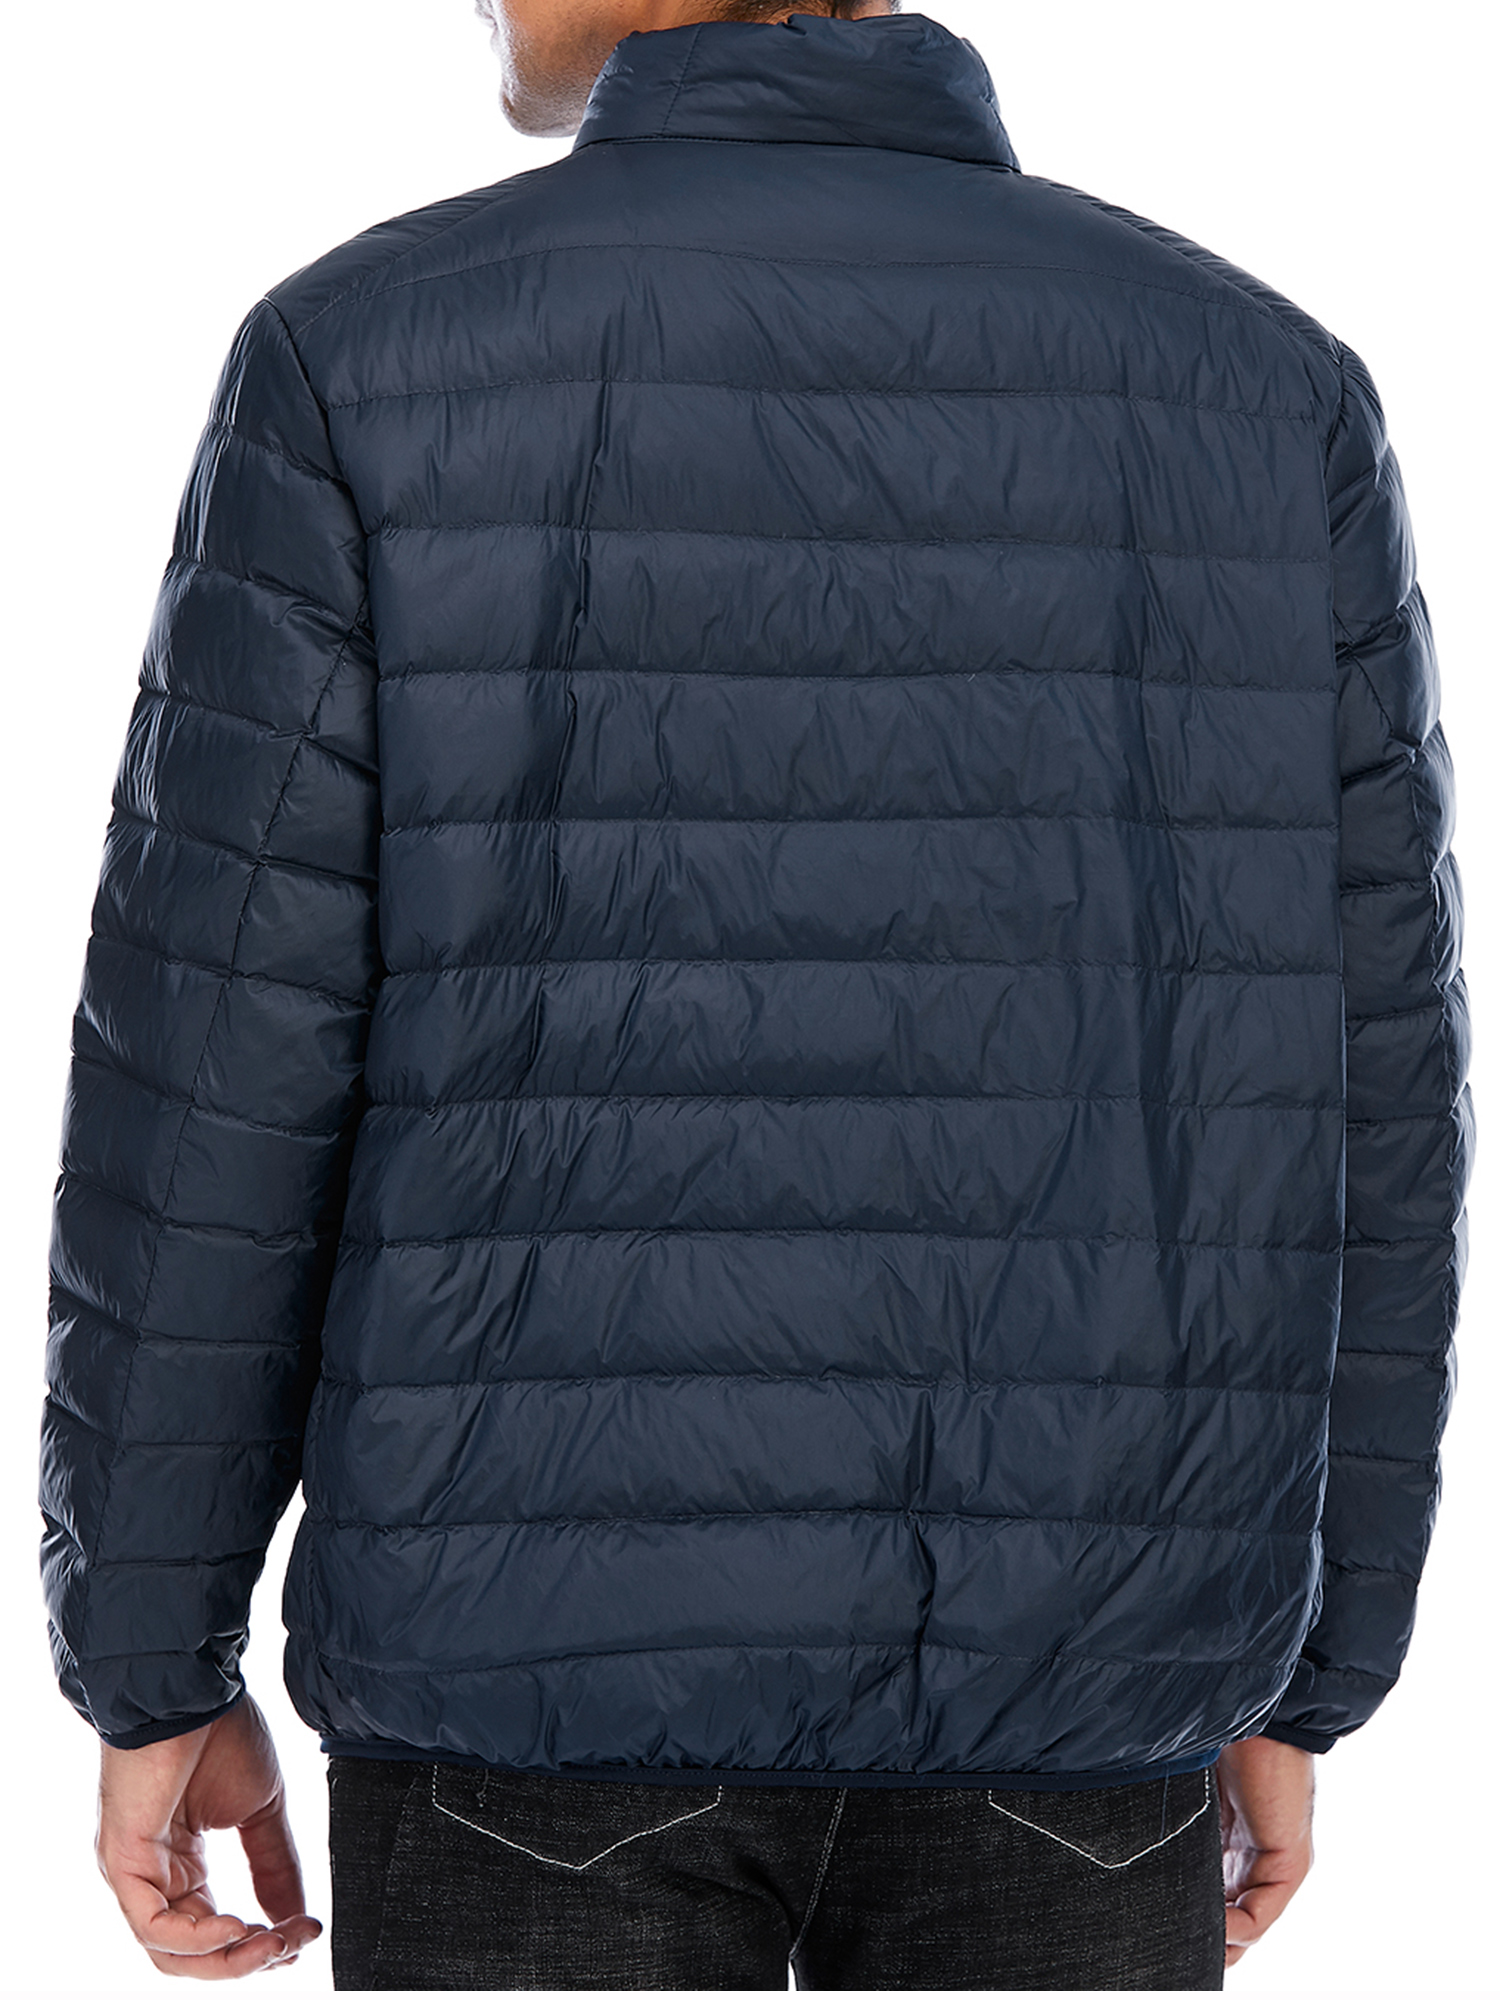 Mens Down Jacket Casual Zip Up Windbreaker Jackets Outdoor Coat Winter Jackets Lightweight Down Jacket Men Boys Puffer Coats Outwear, Size S-2XL - image 2 of 7